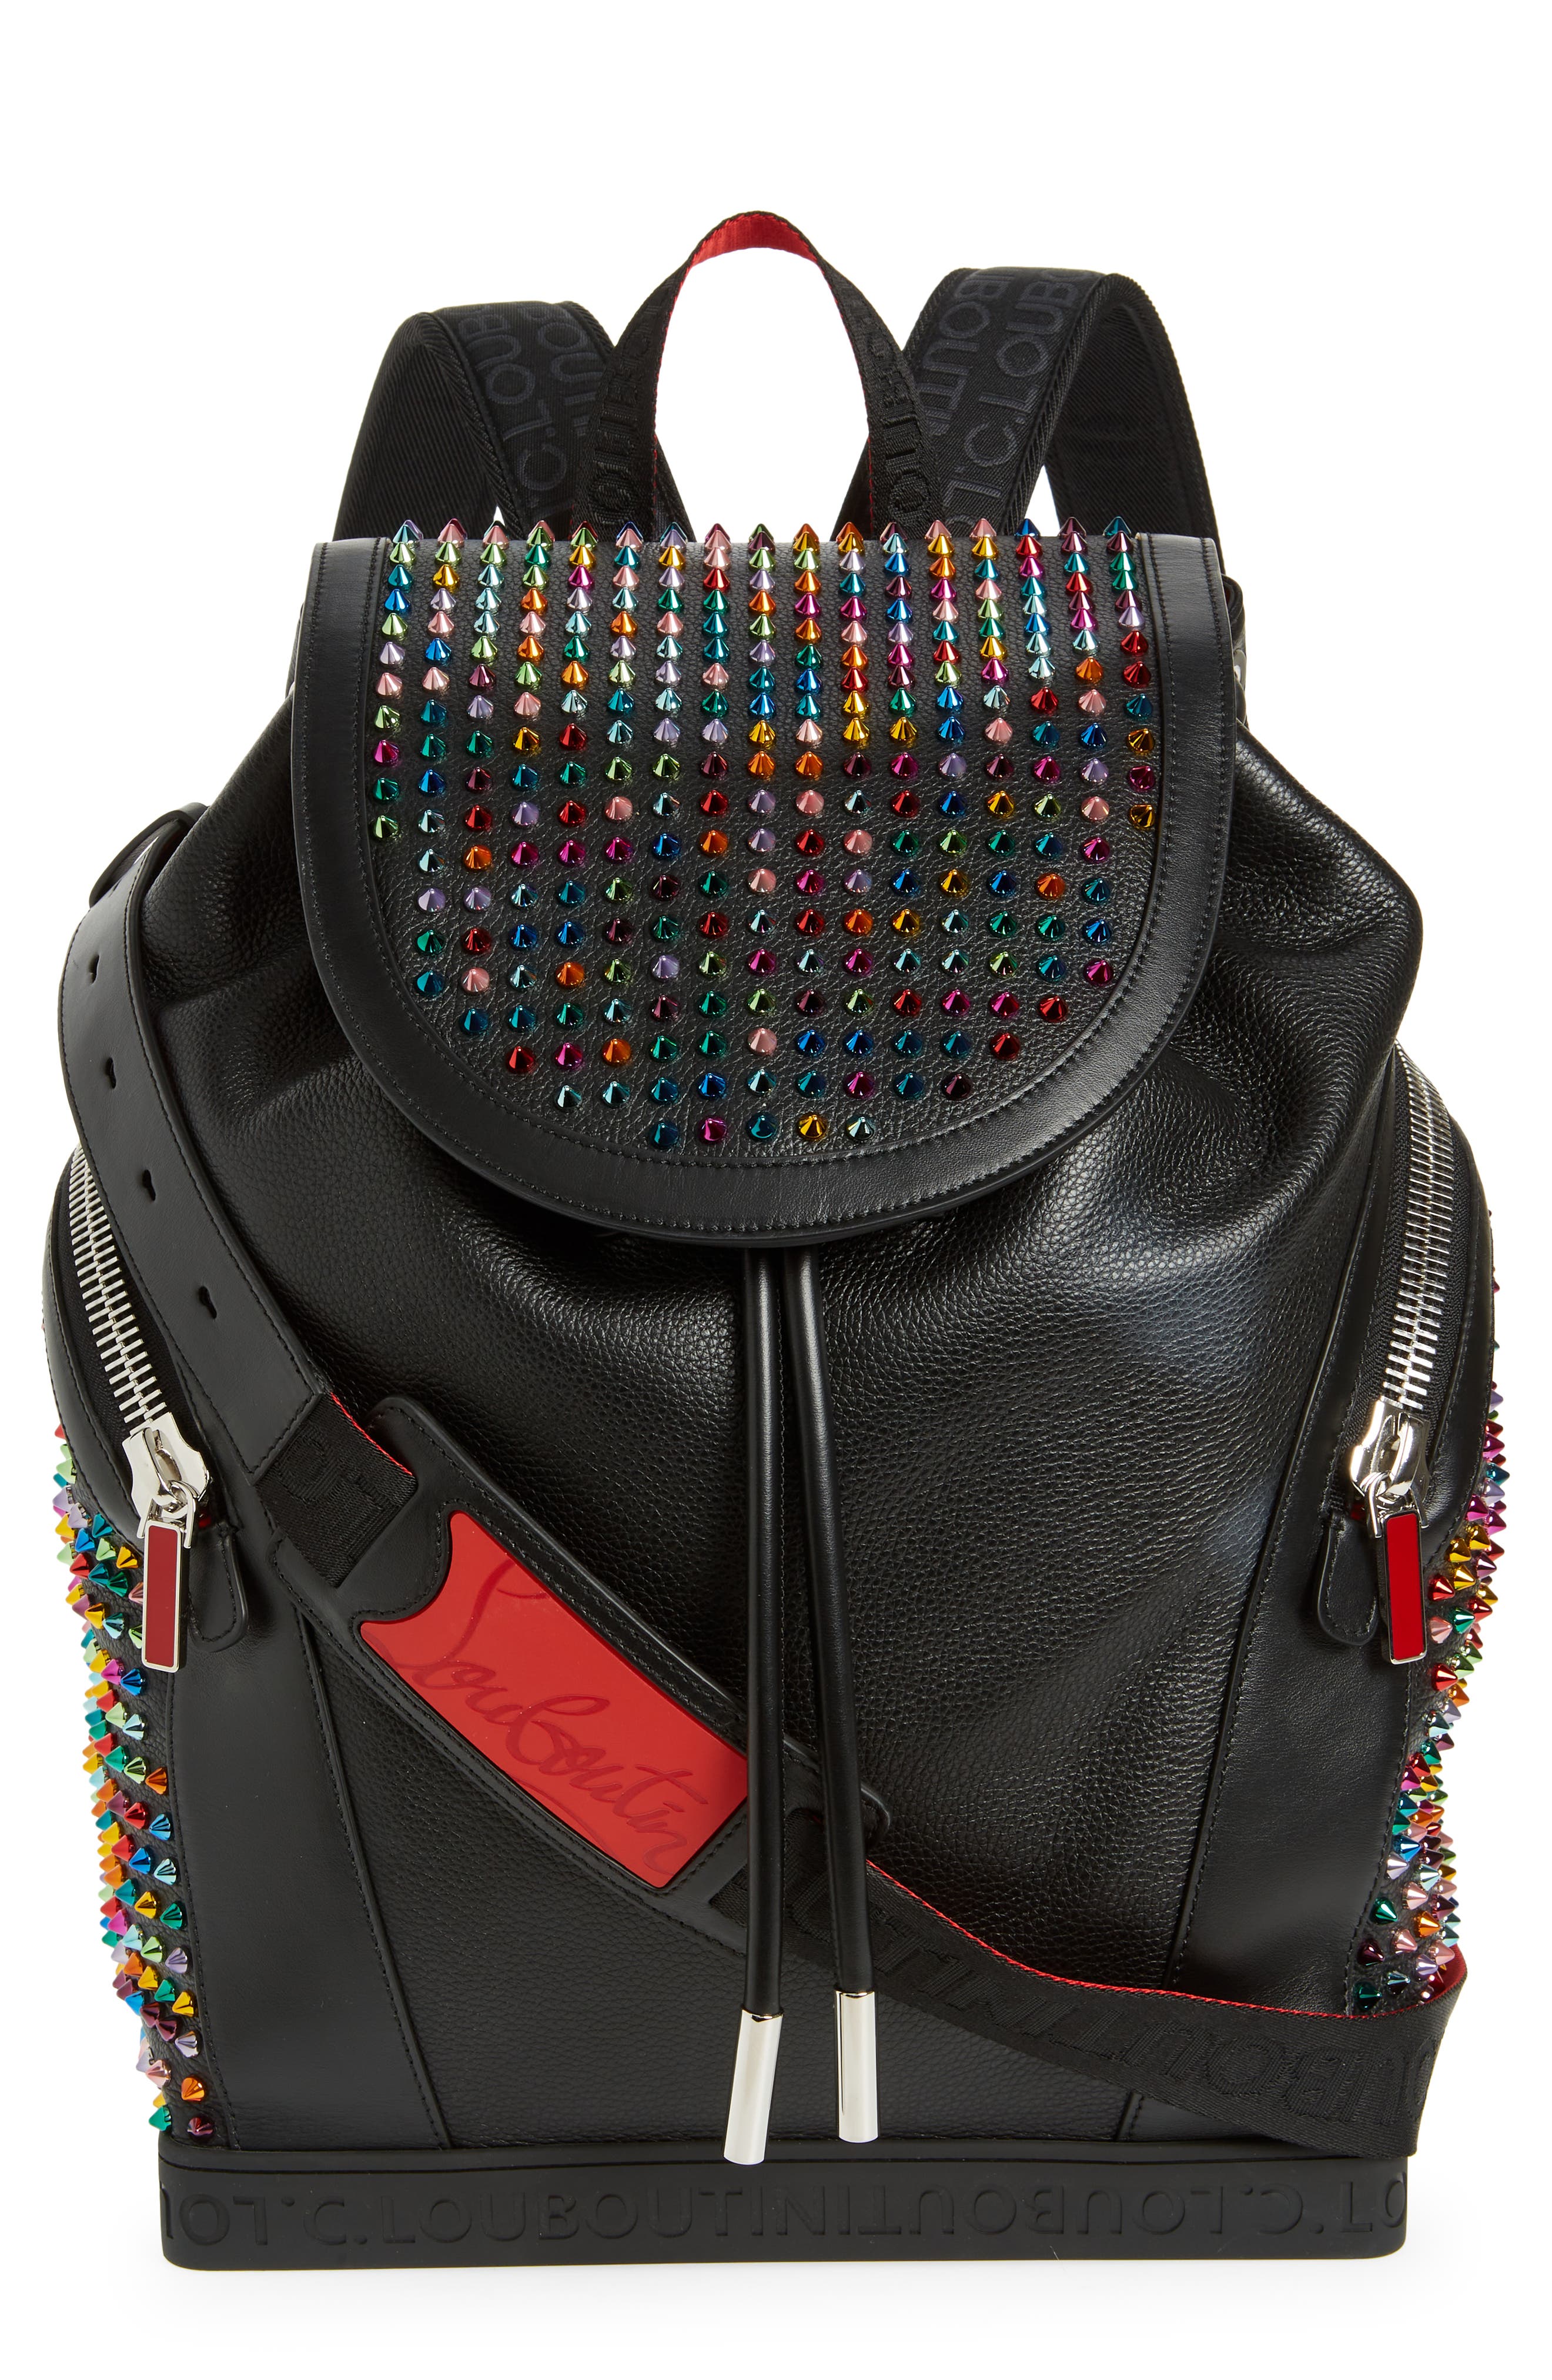 Christian Louboutin Explorafunk Spikes Calfskin Leather Backpack in Black/Black/Multi